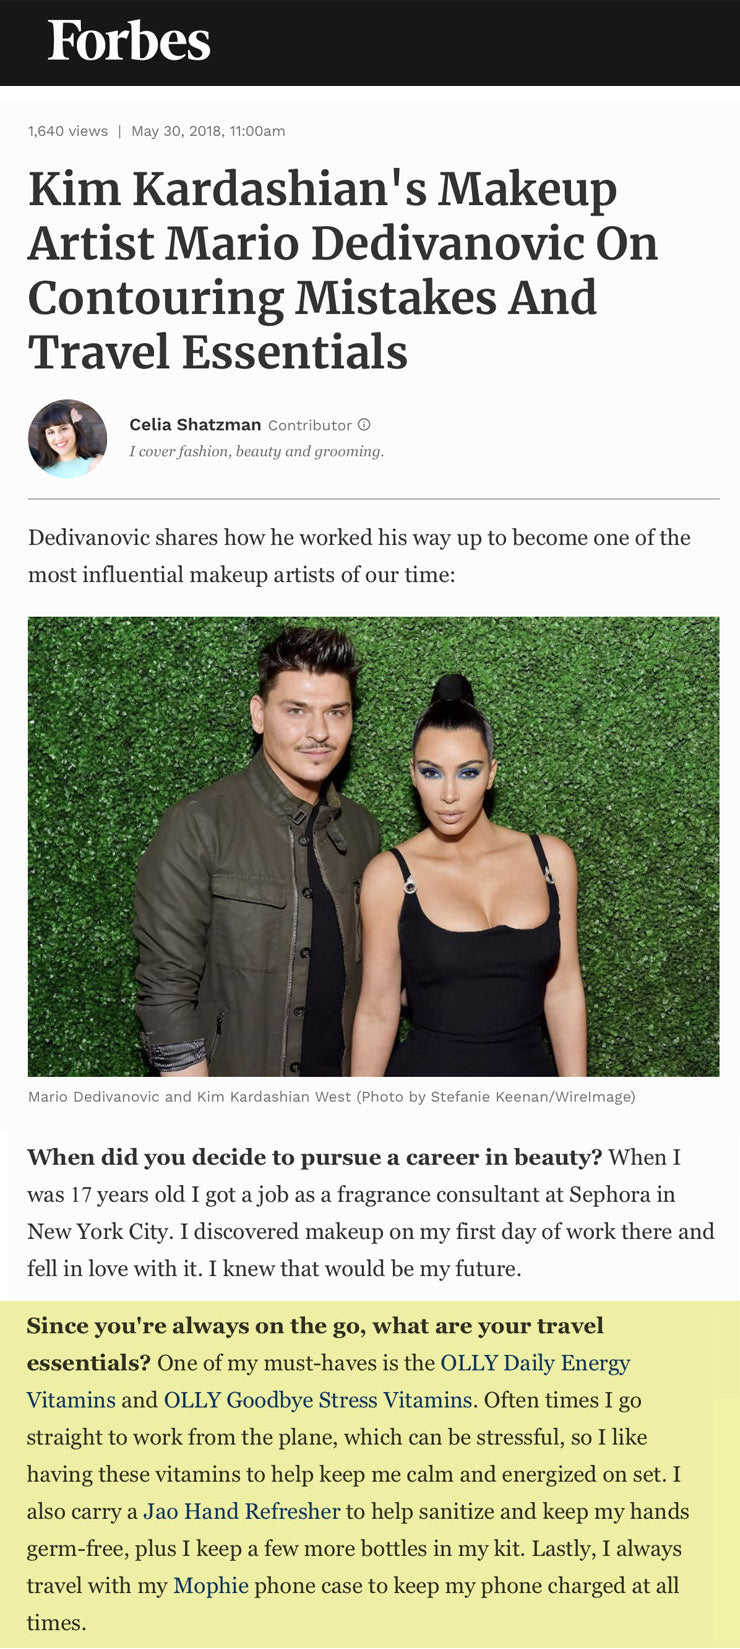 Kim Kardashian's Makeup Artist Mario Dedivanovic uses Jao Refresher